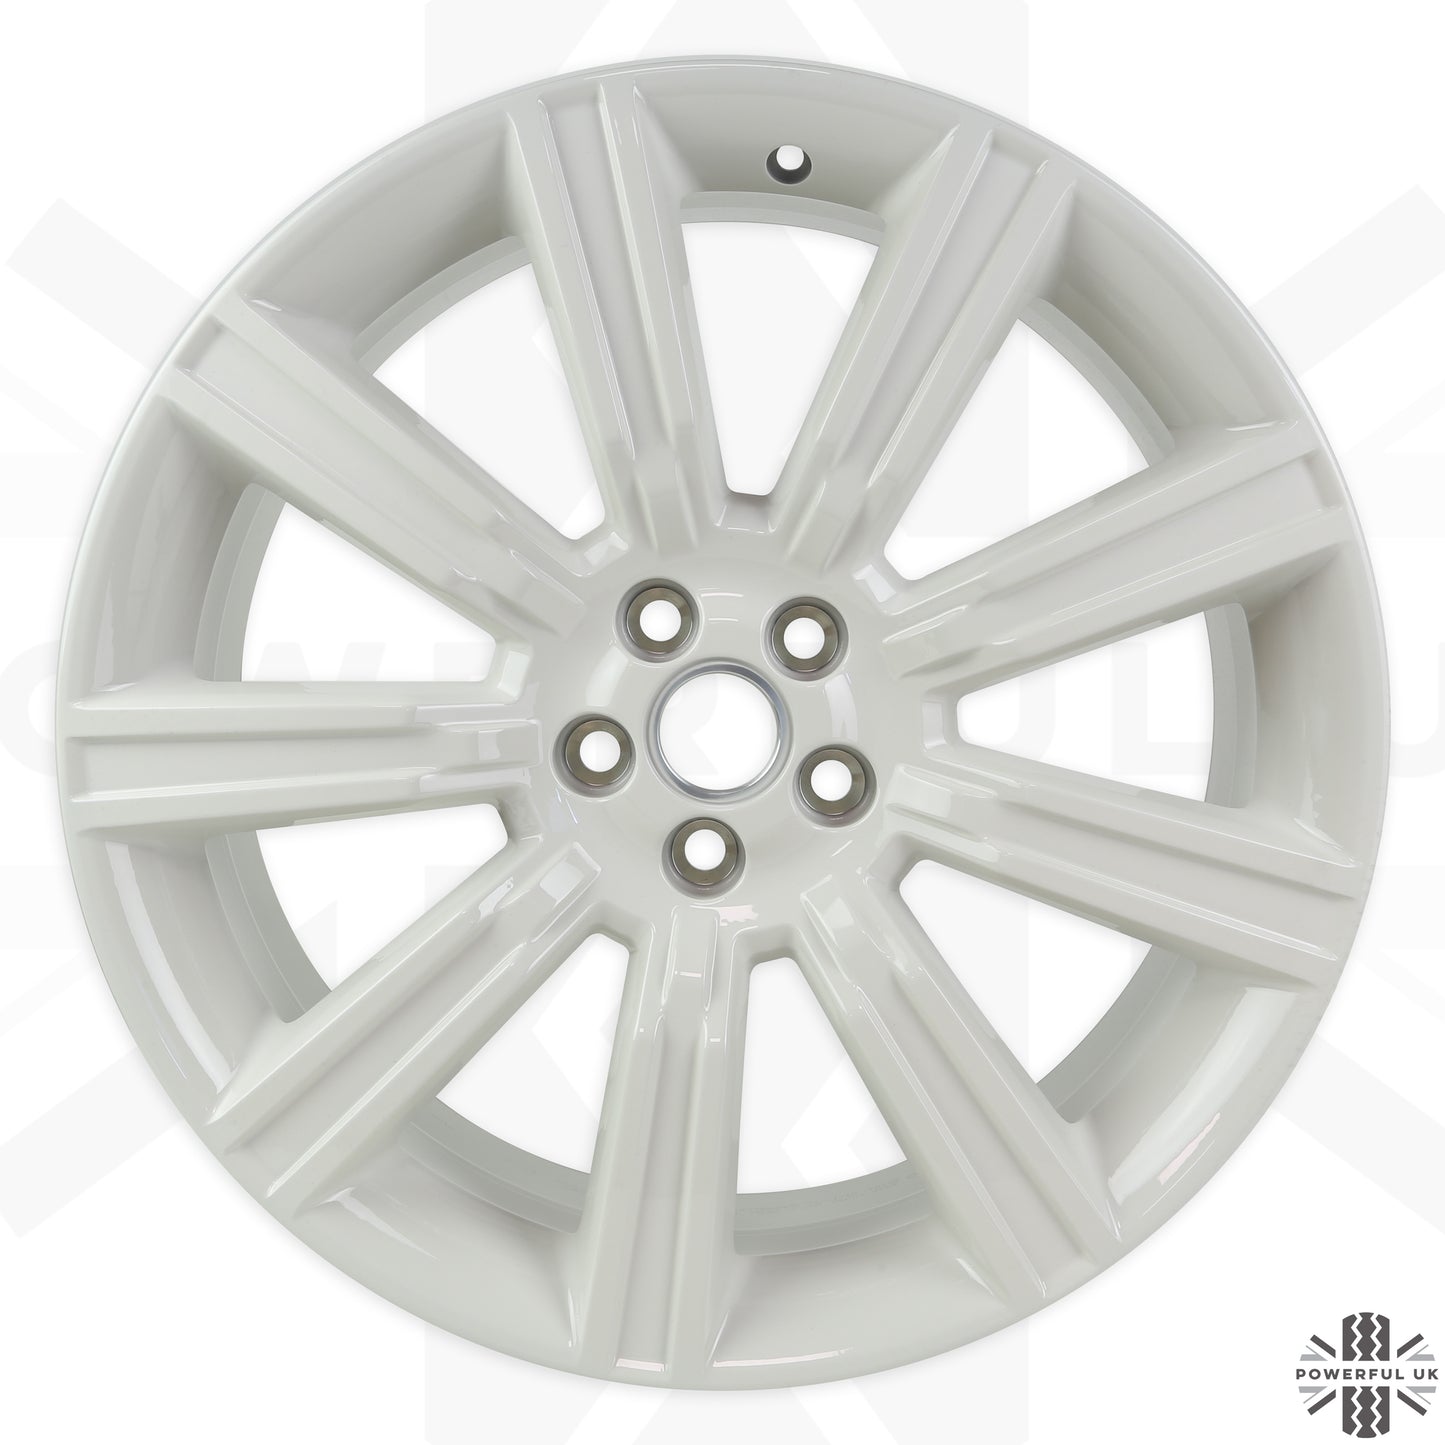 20" Alloy Wheels (Style 9001) - Fuji White - Set of 4 for Range Rover Evoque Genuine